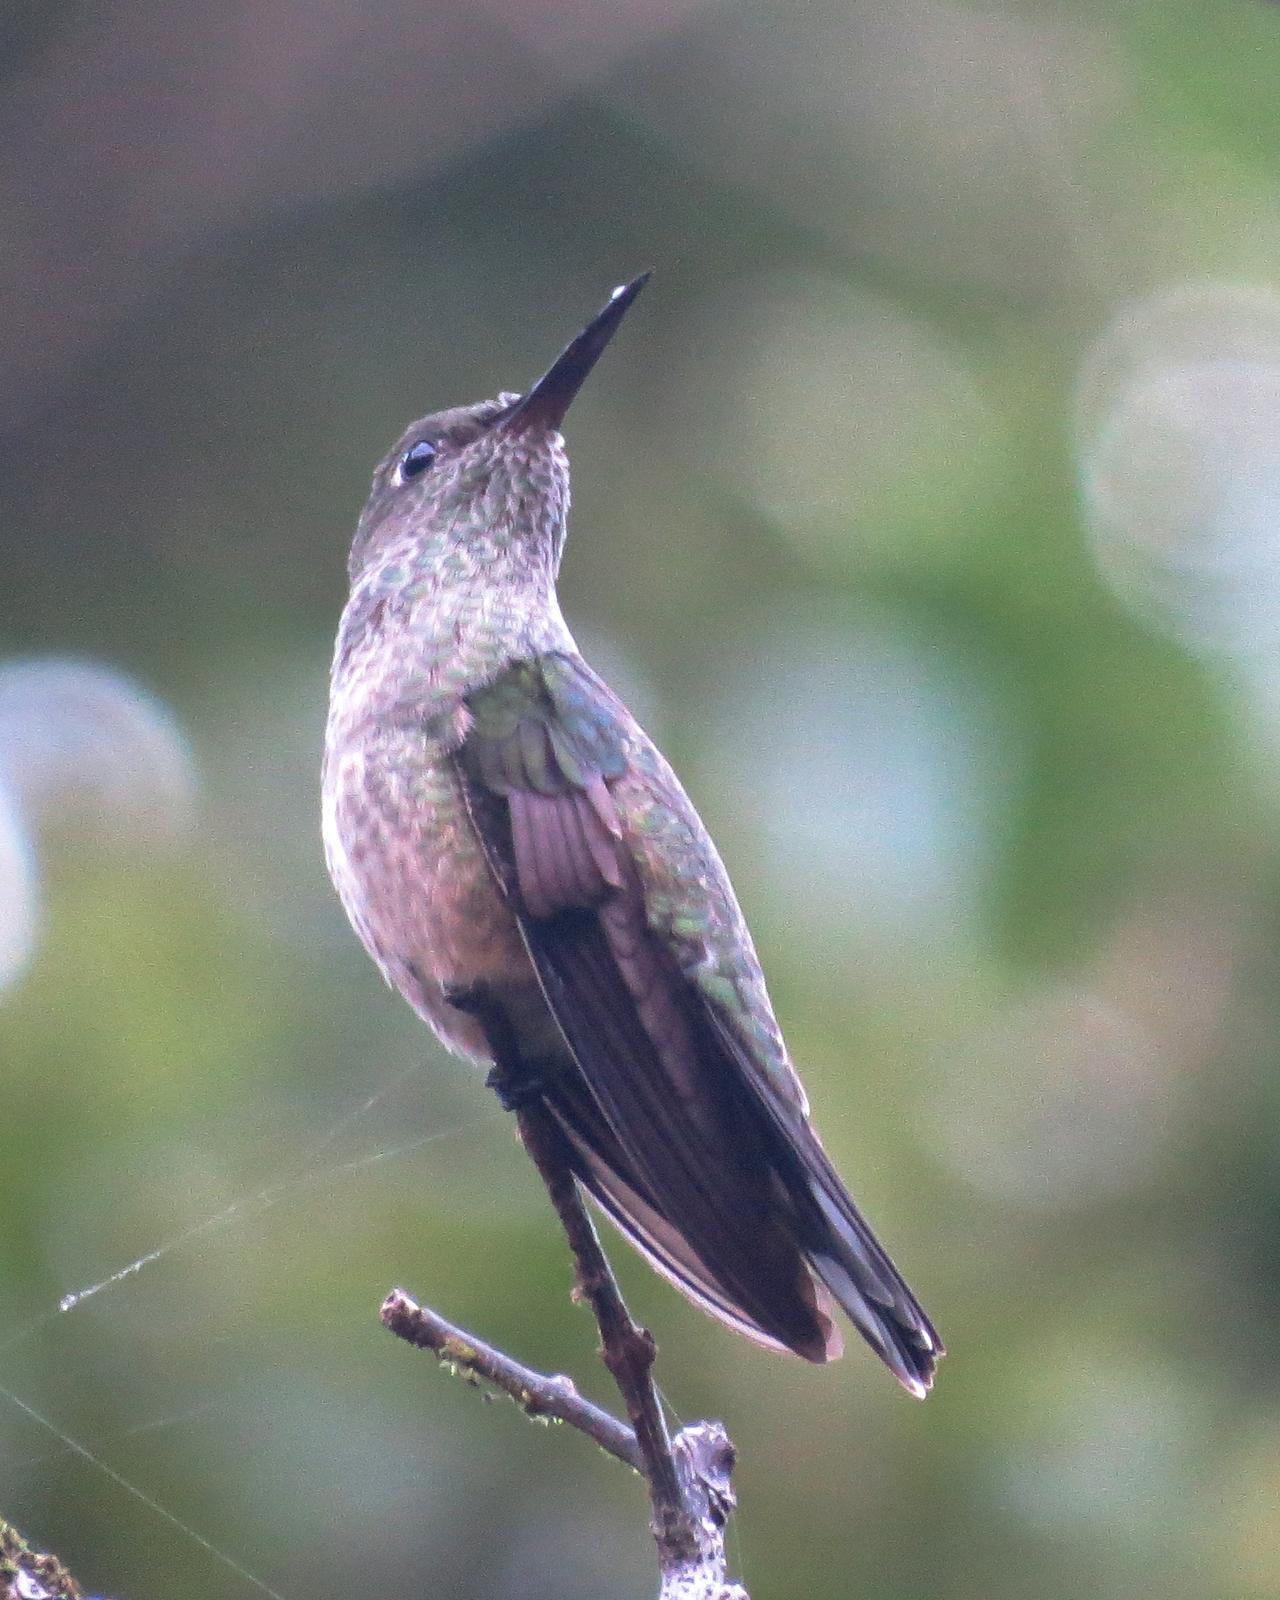 Scaly-breasted Hummingbird Photo by John van Dort